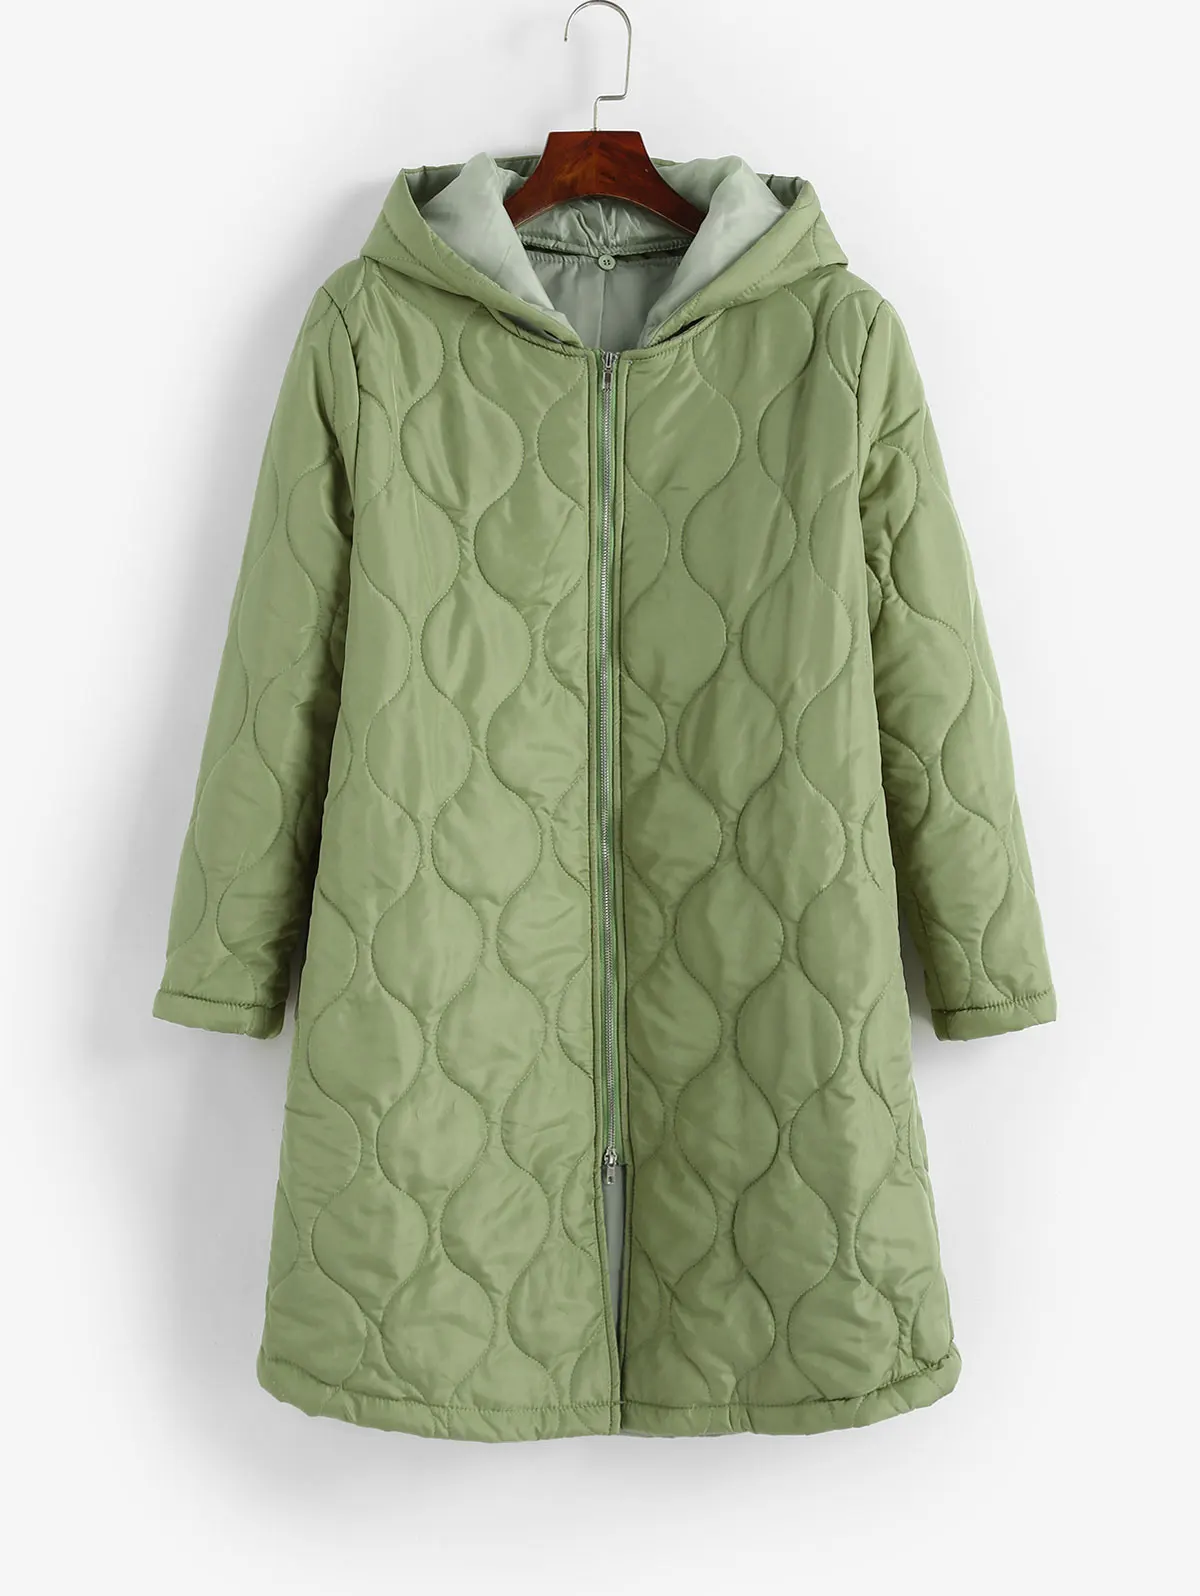 

ZAFUL Hooded Quilted Double Way Zip Longline Coat Autumn Winter Padded Jacket Women Casual Outwear